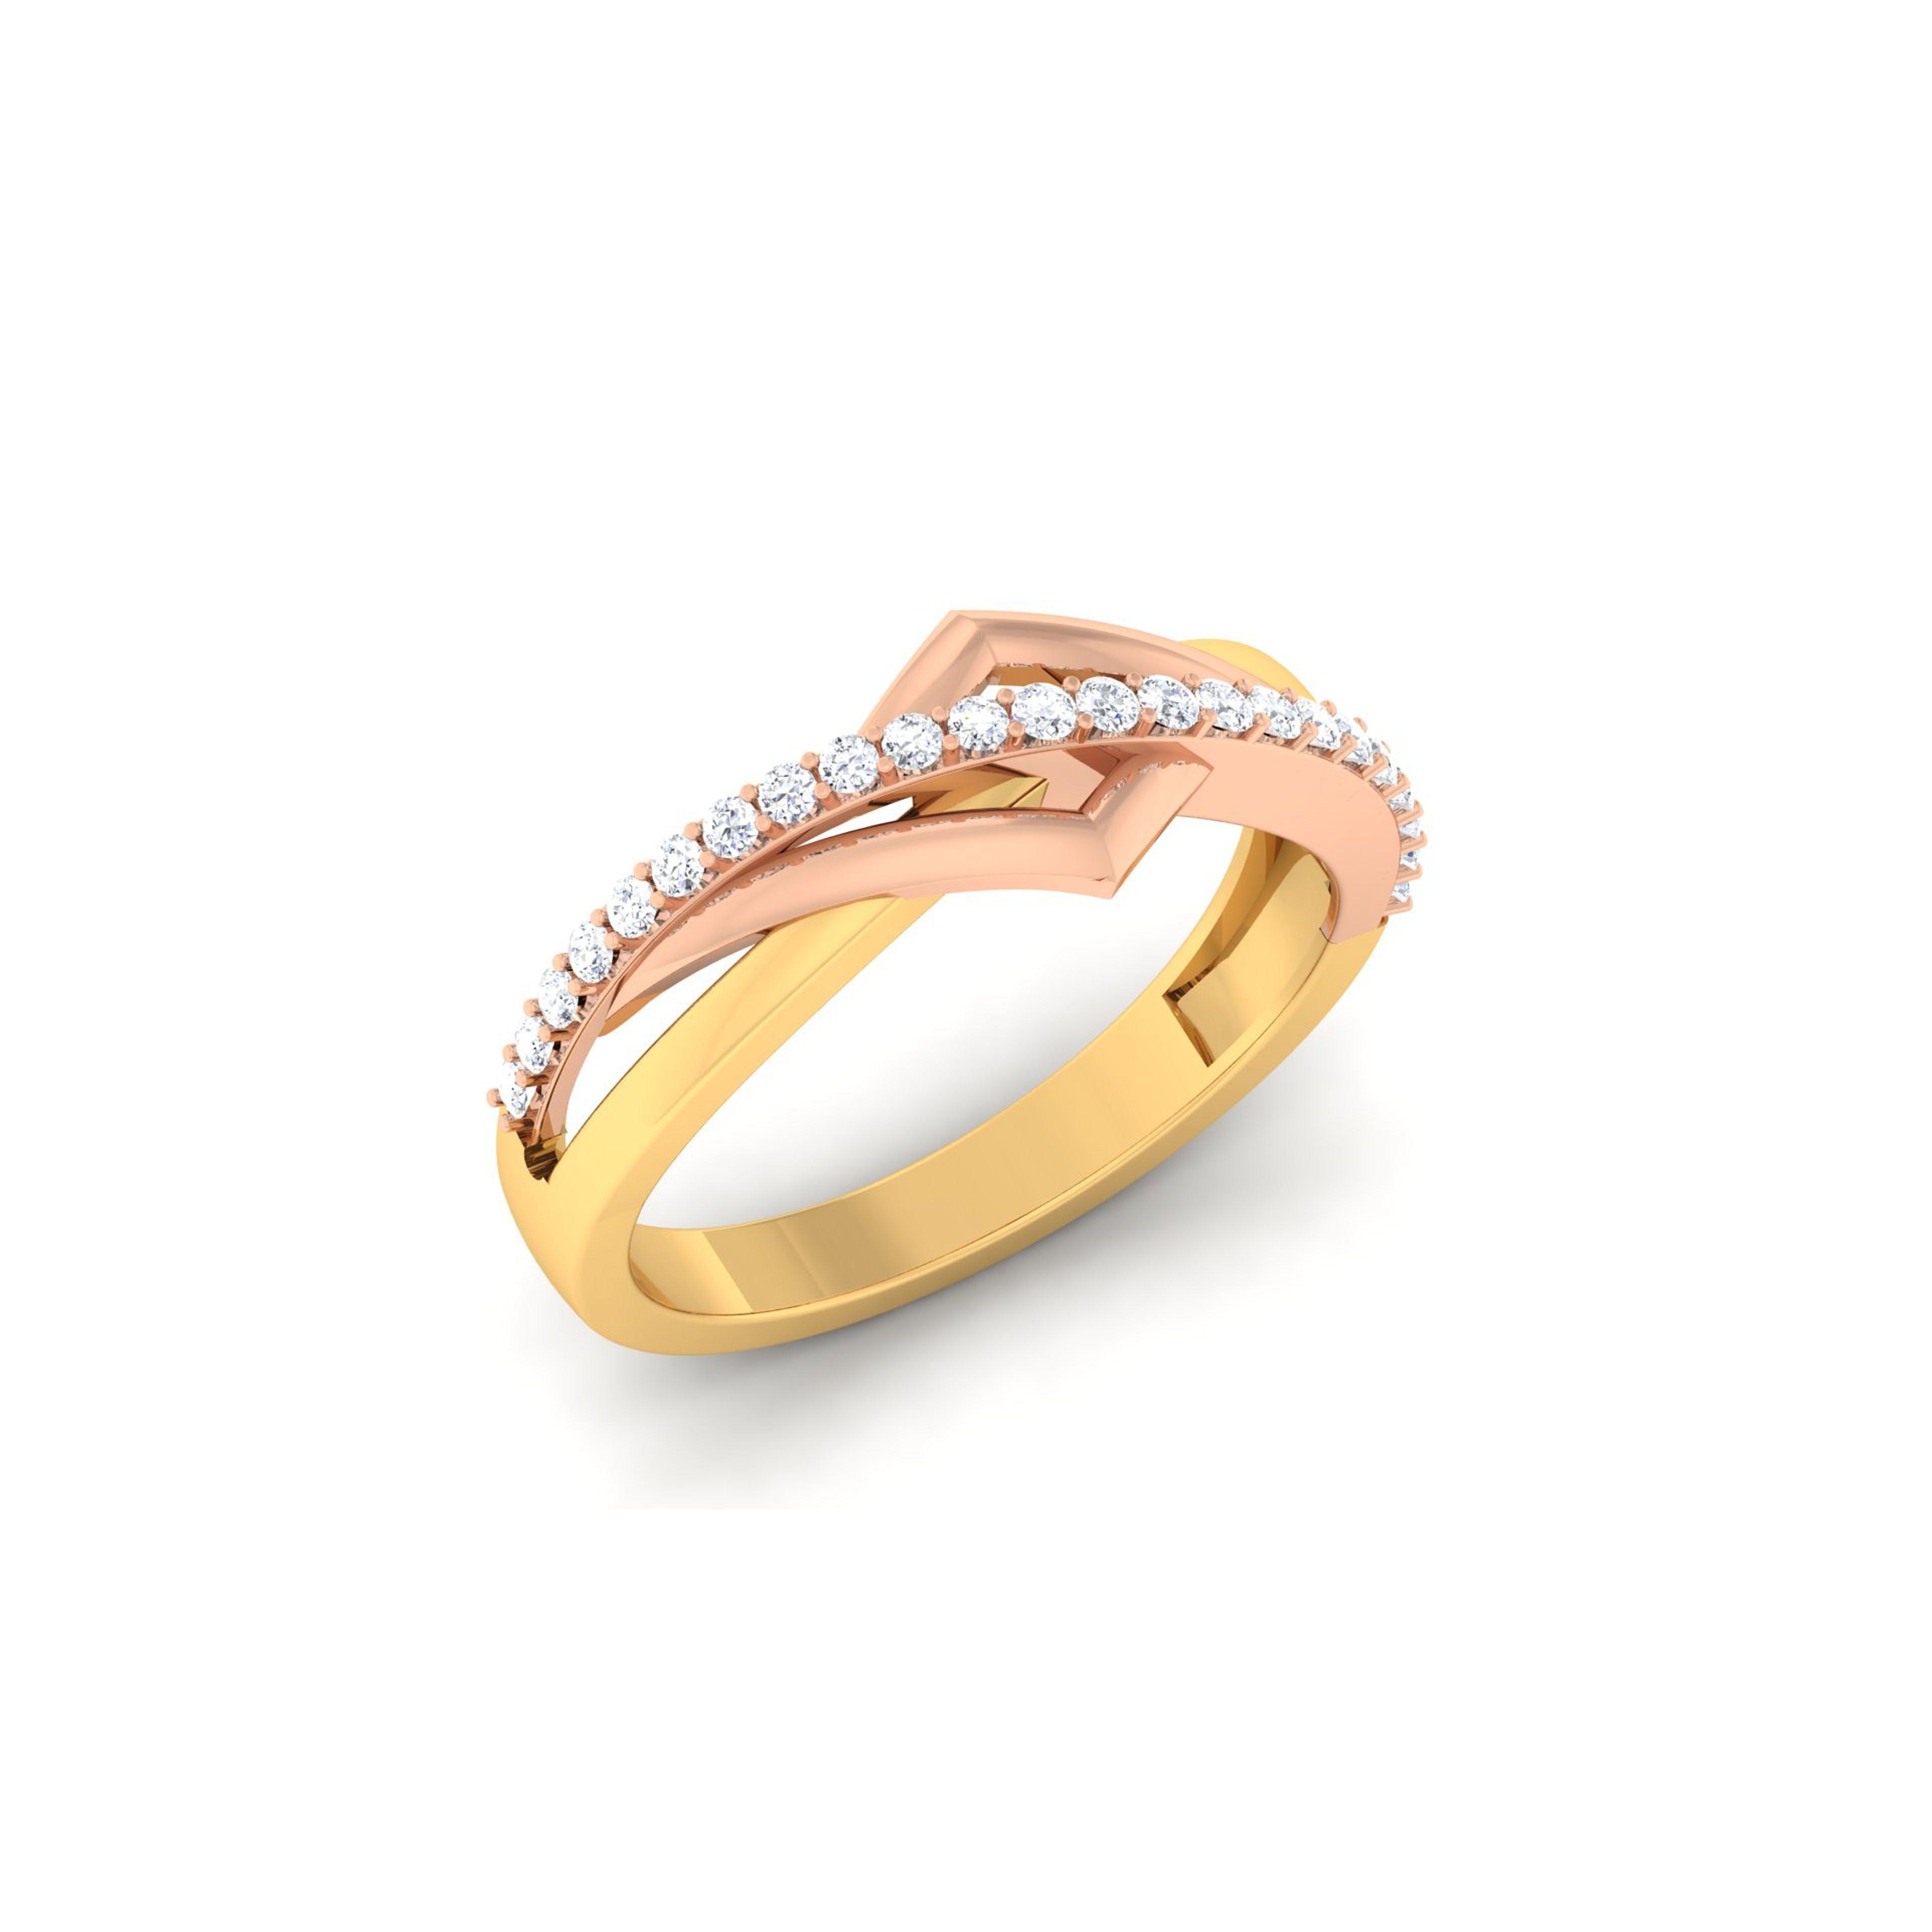 Ornate Jewels' 6-Stone American Diamond Ring for Women